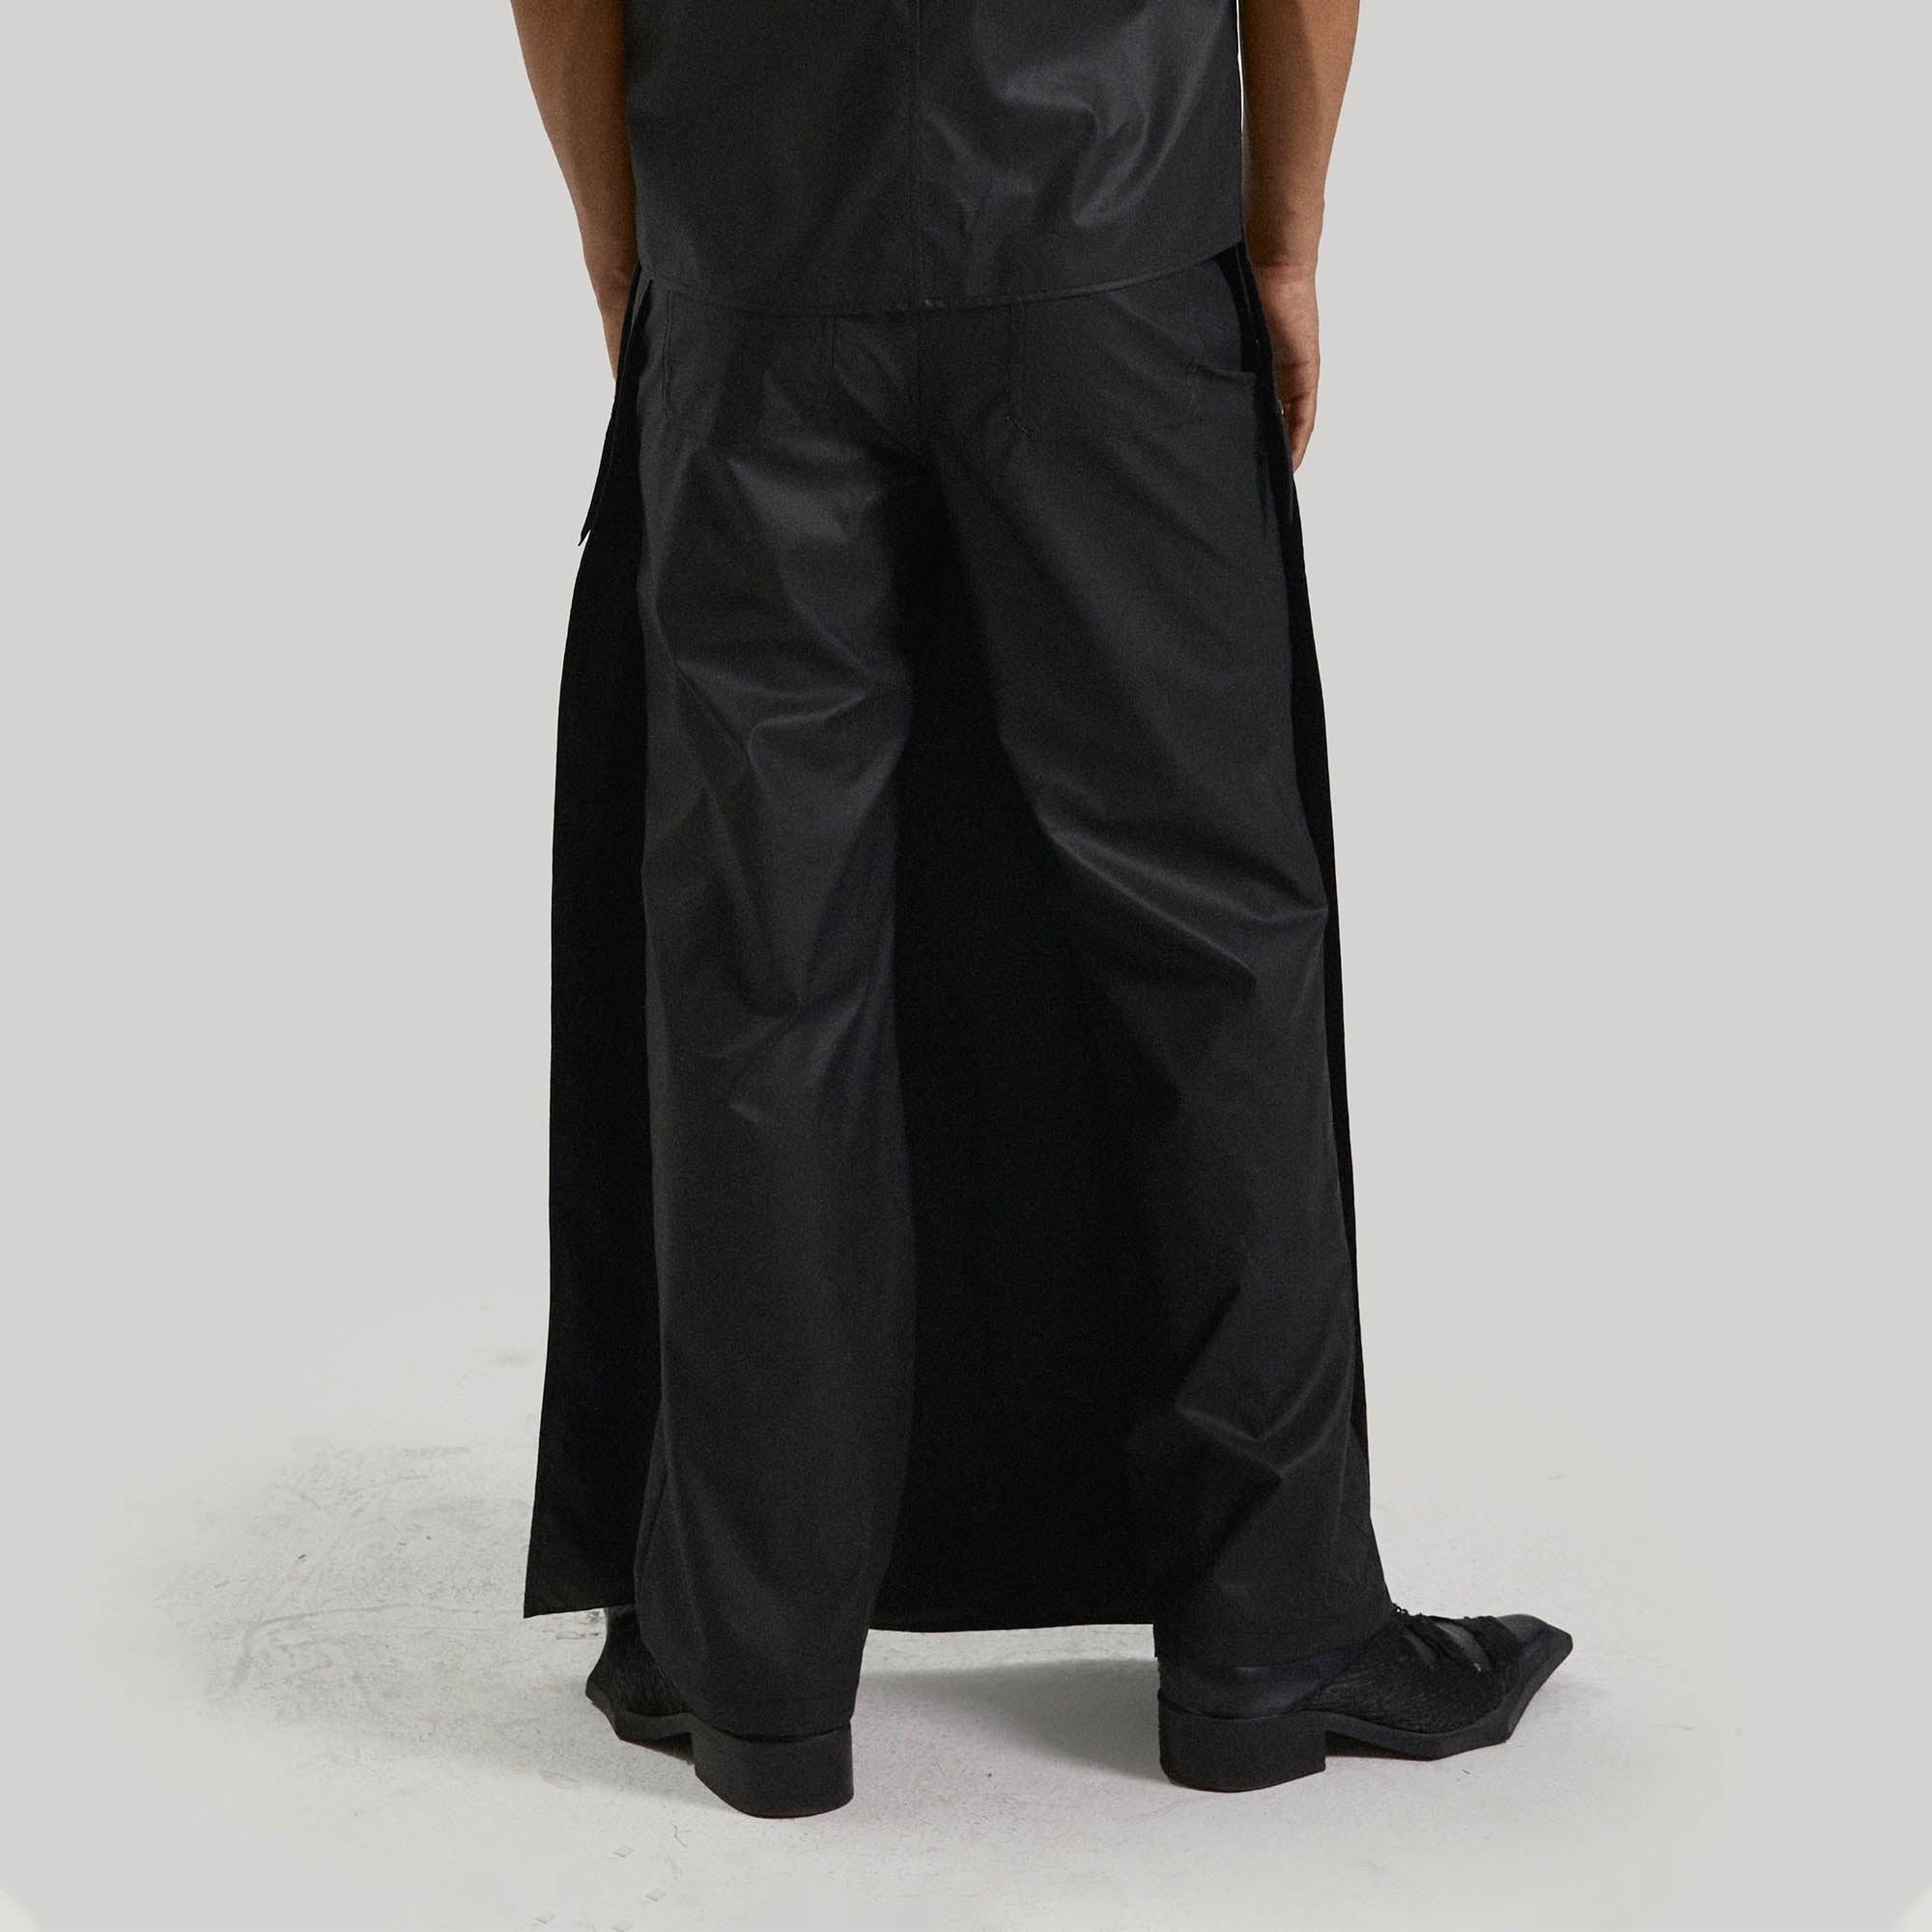 KADAKADA Detachable Cloak Faux Leather Pants